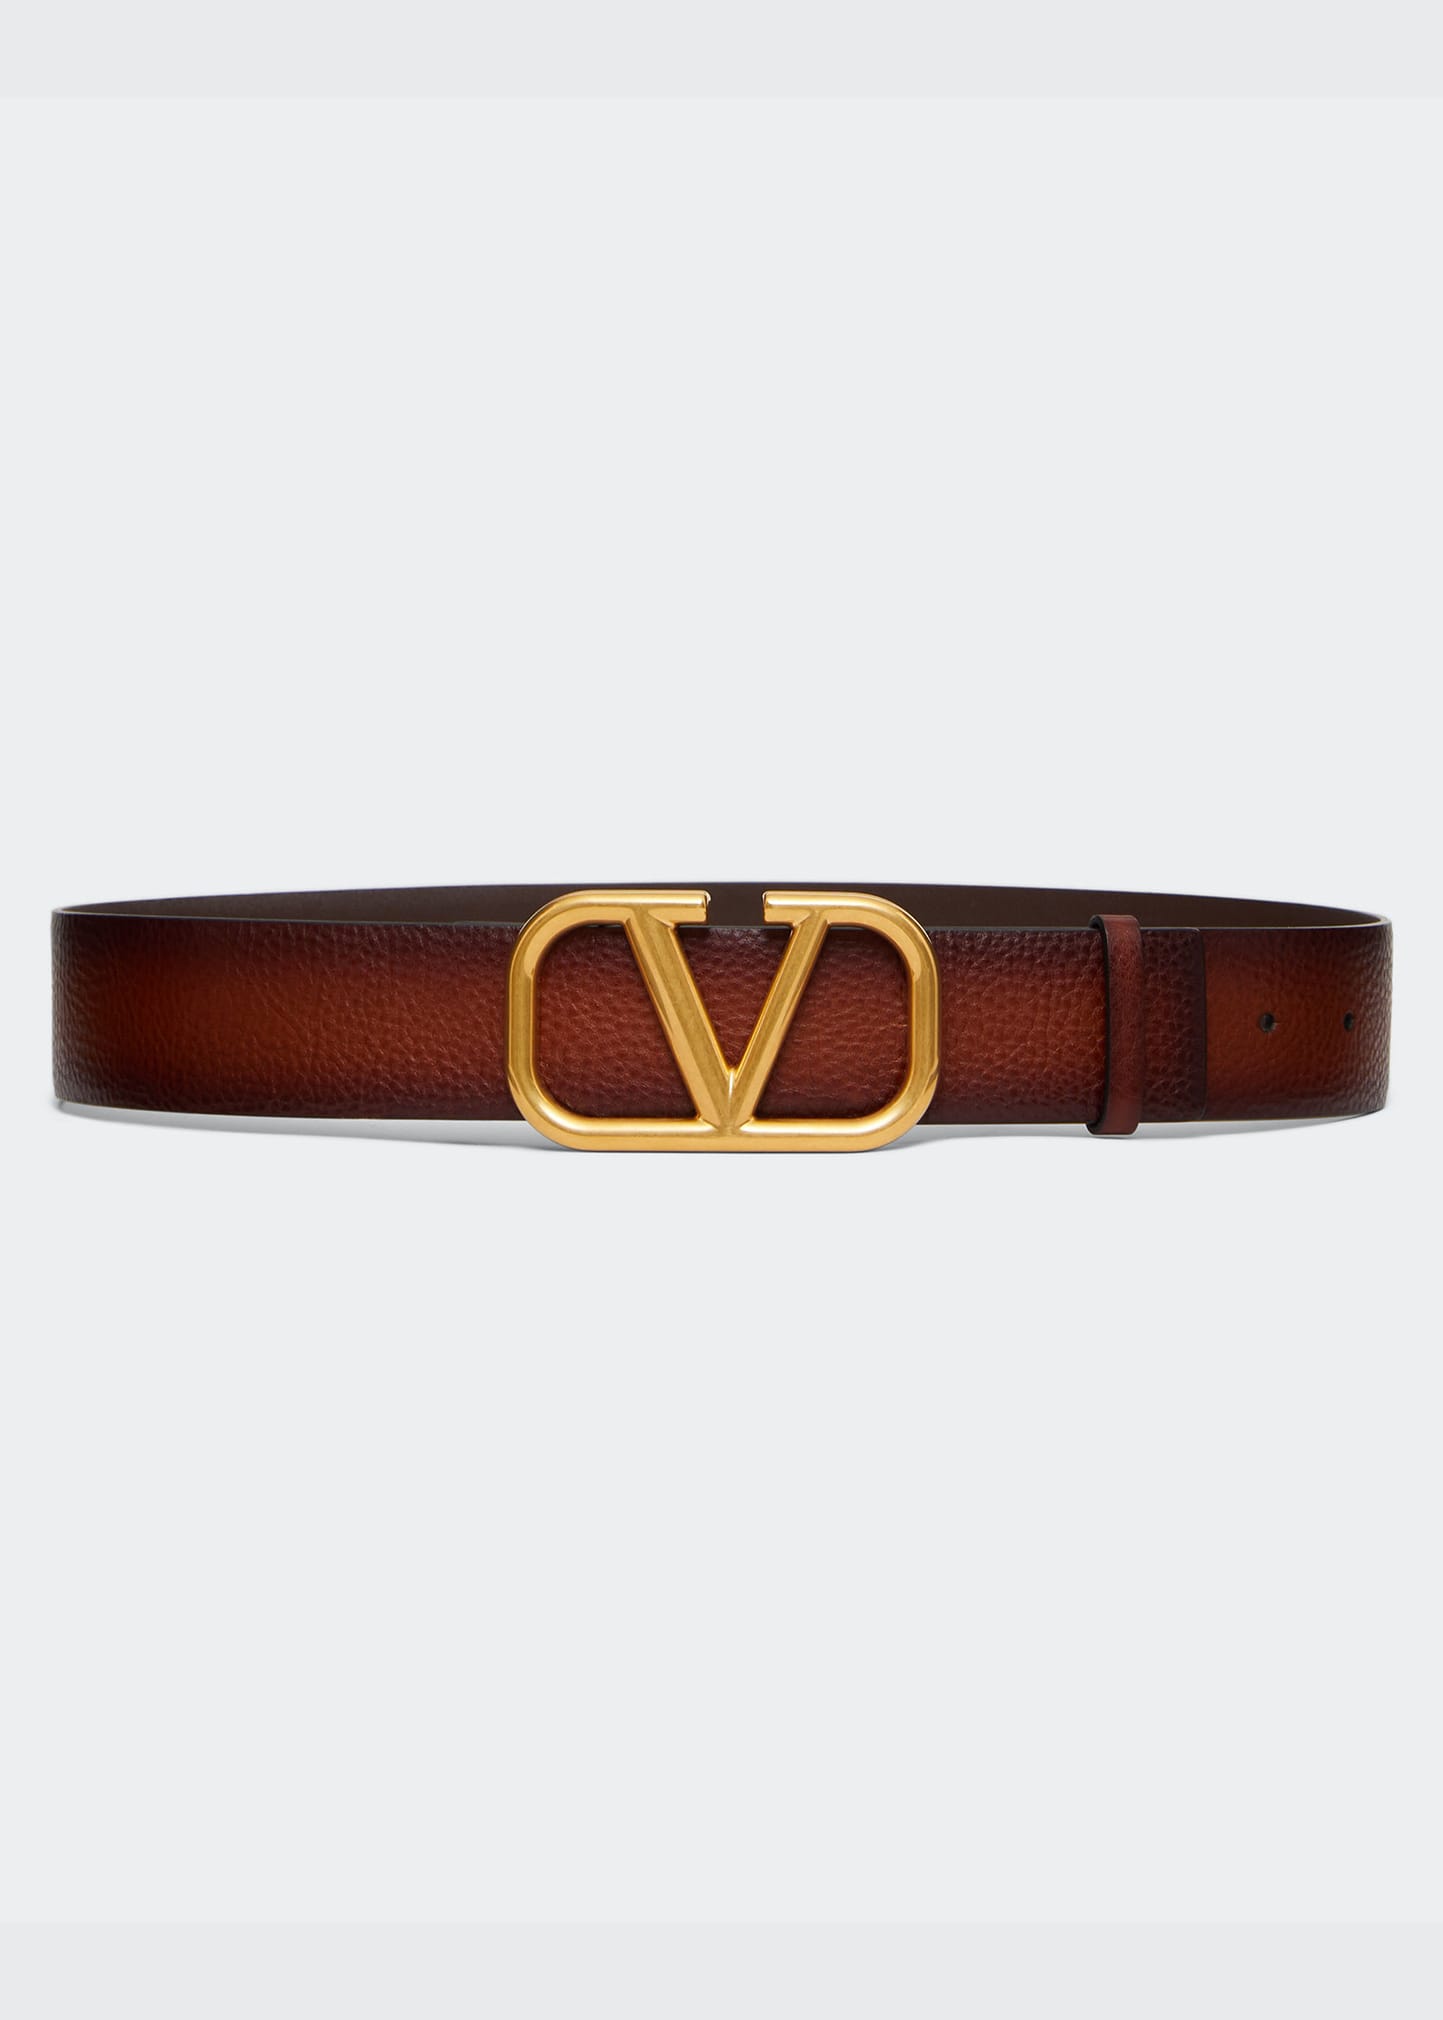 Valentino Garavani Vlogo Leather Belt, Smokey Brown, Women's, 28in / 70cm, Belts Leather Belts